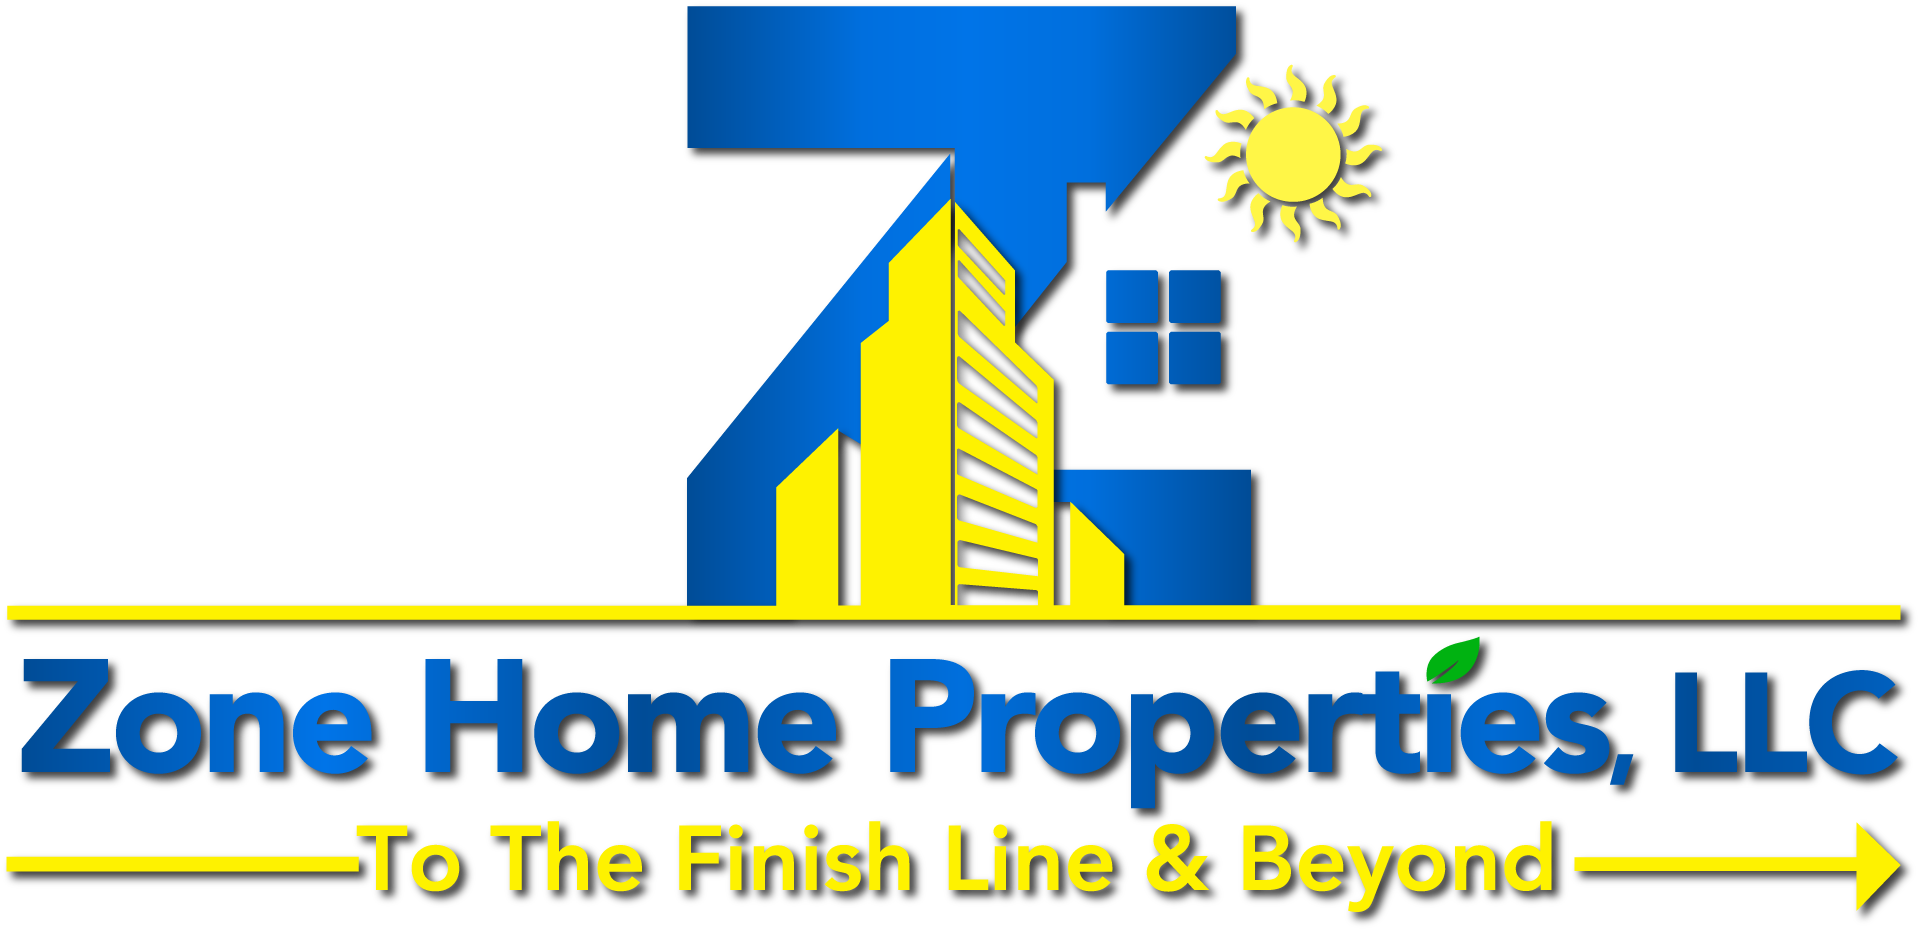 Zone Home Properties, LLC